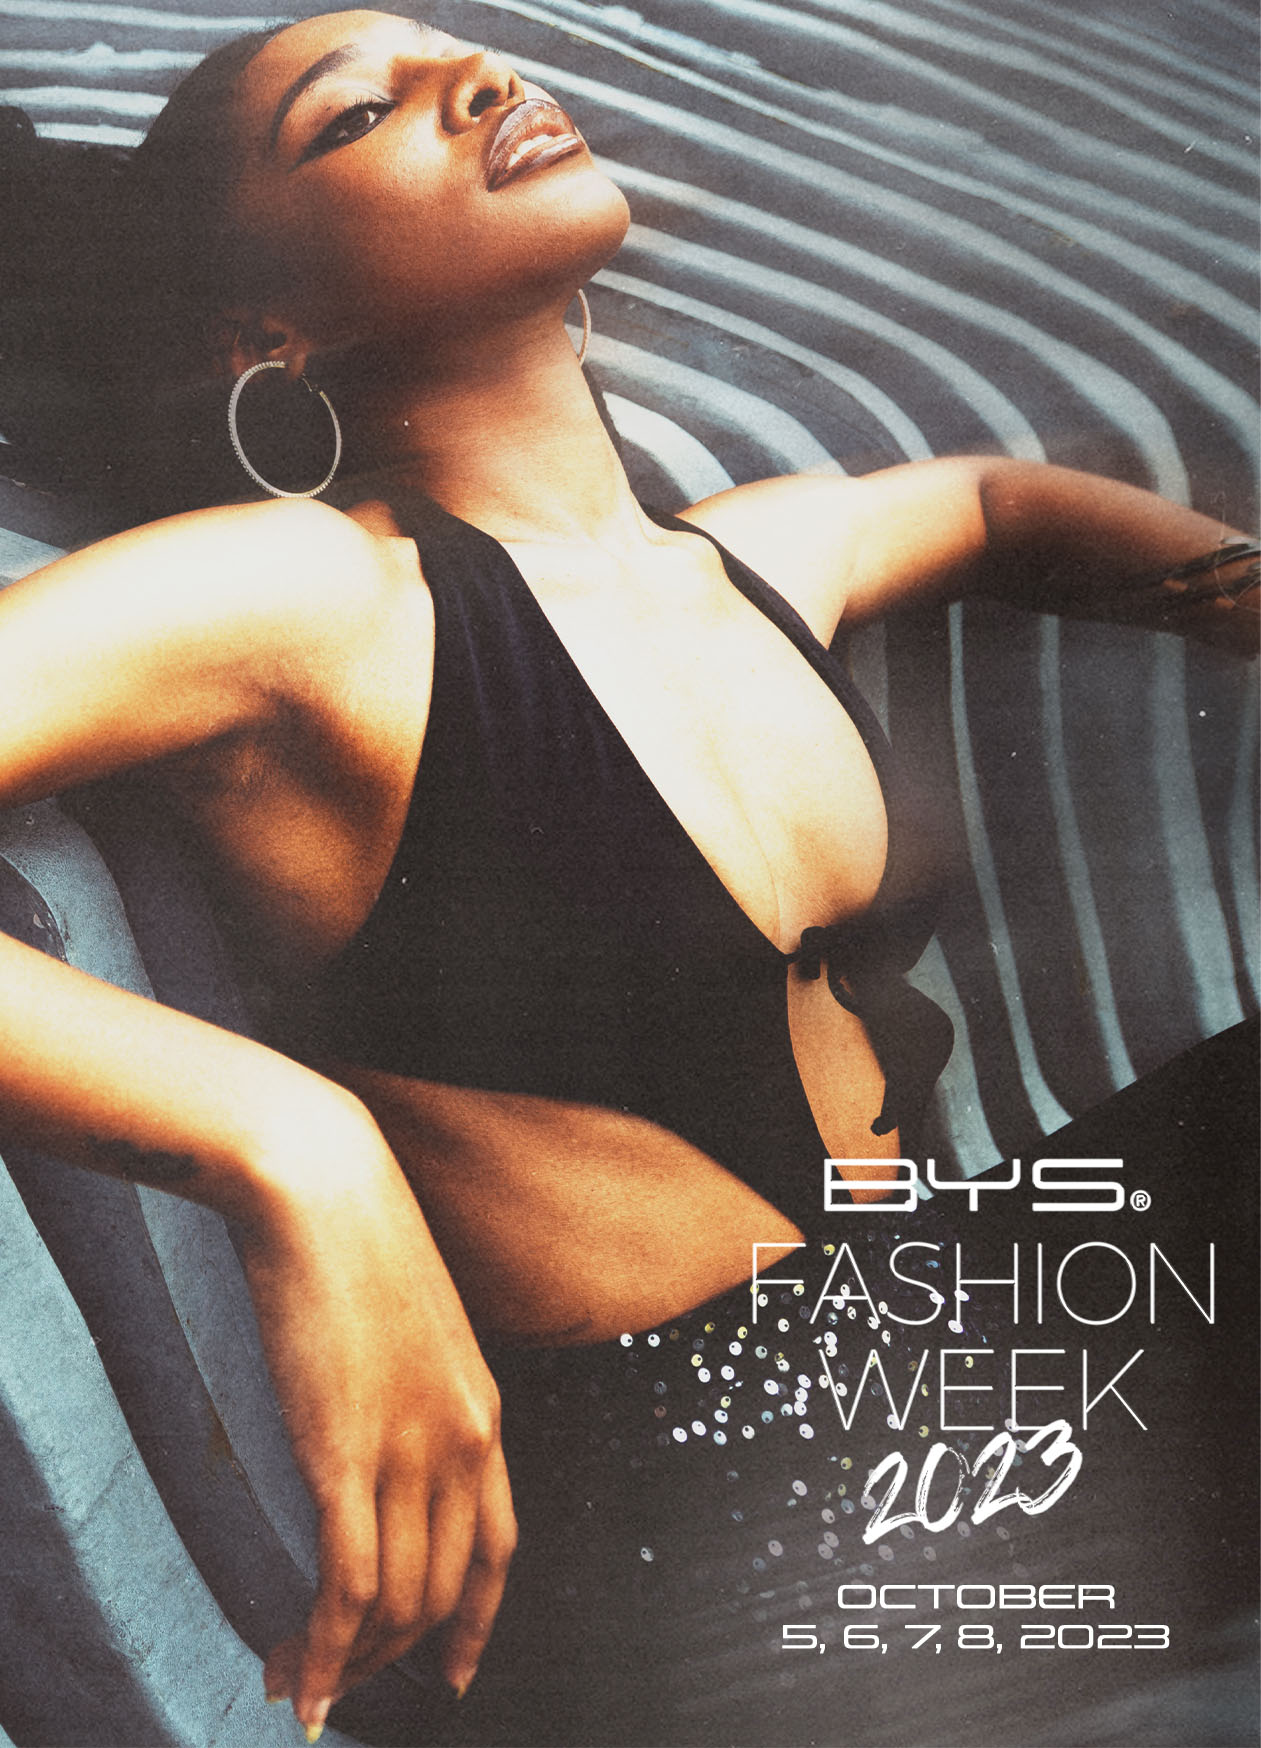 BYS Fashion Week Poster 1